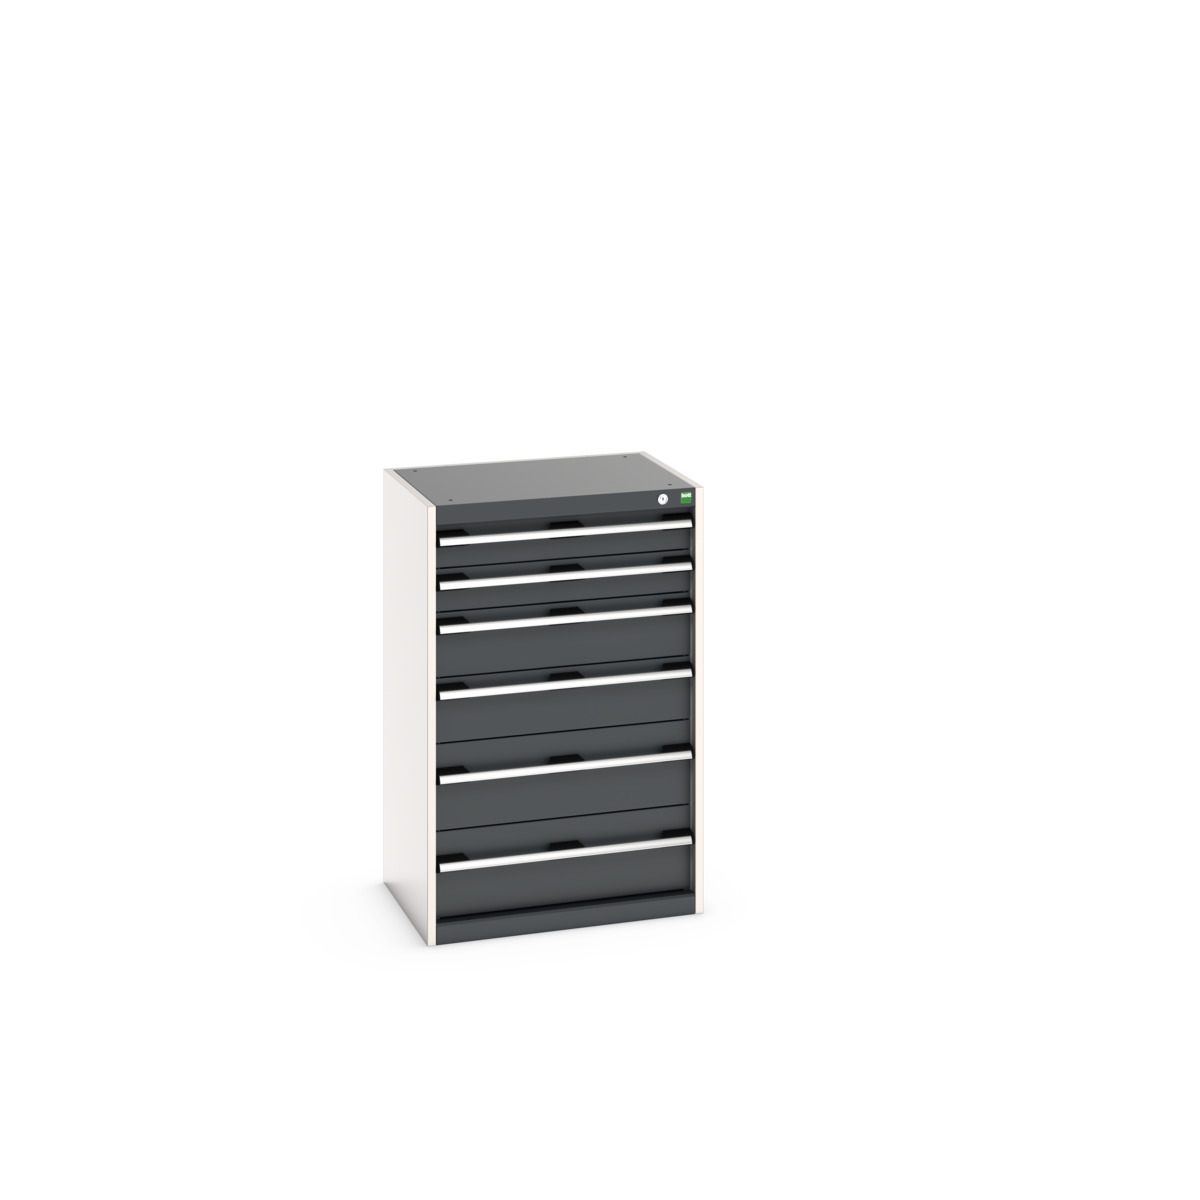 40011054. - cubio drawer cabinet